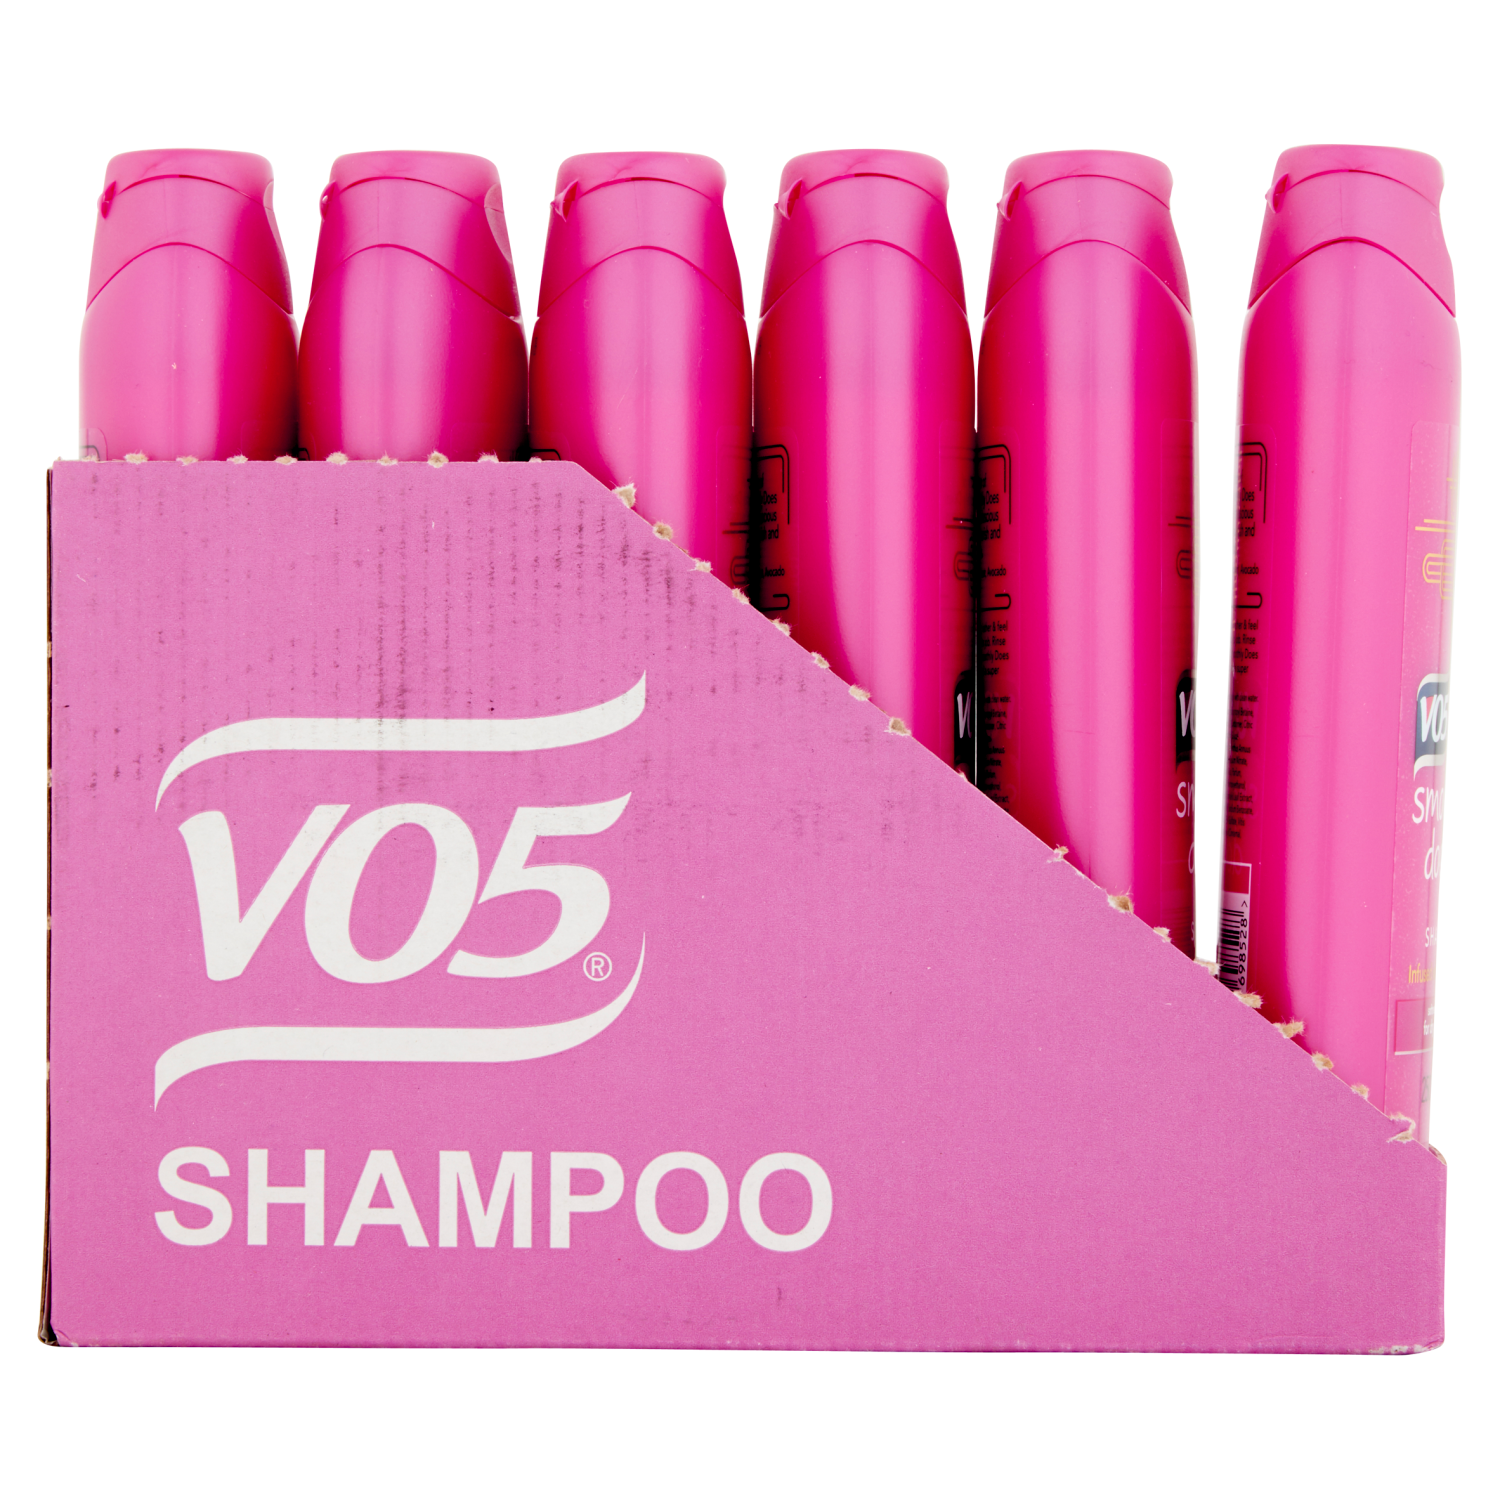 VO5 Shampoo 250ml Smoothly Does It